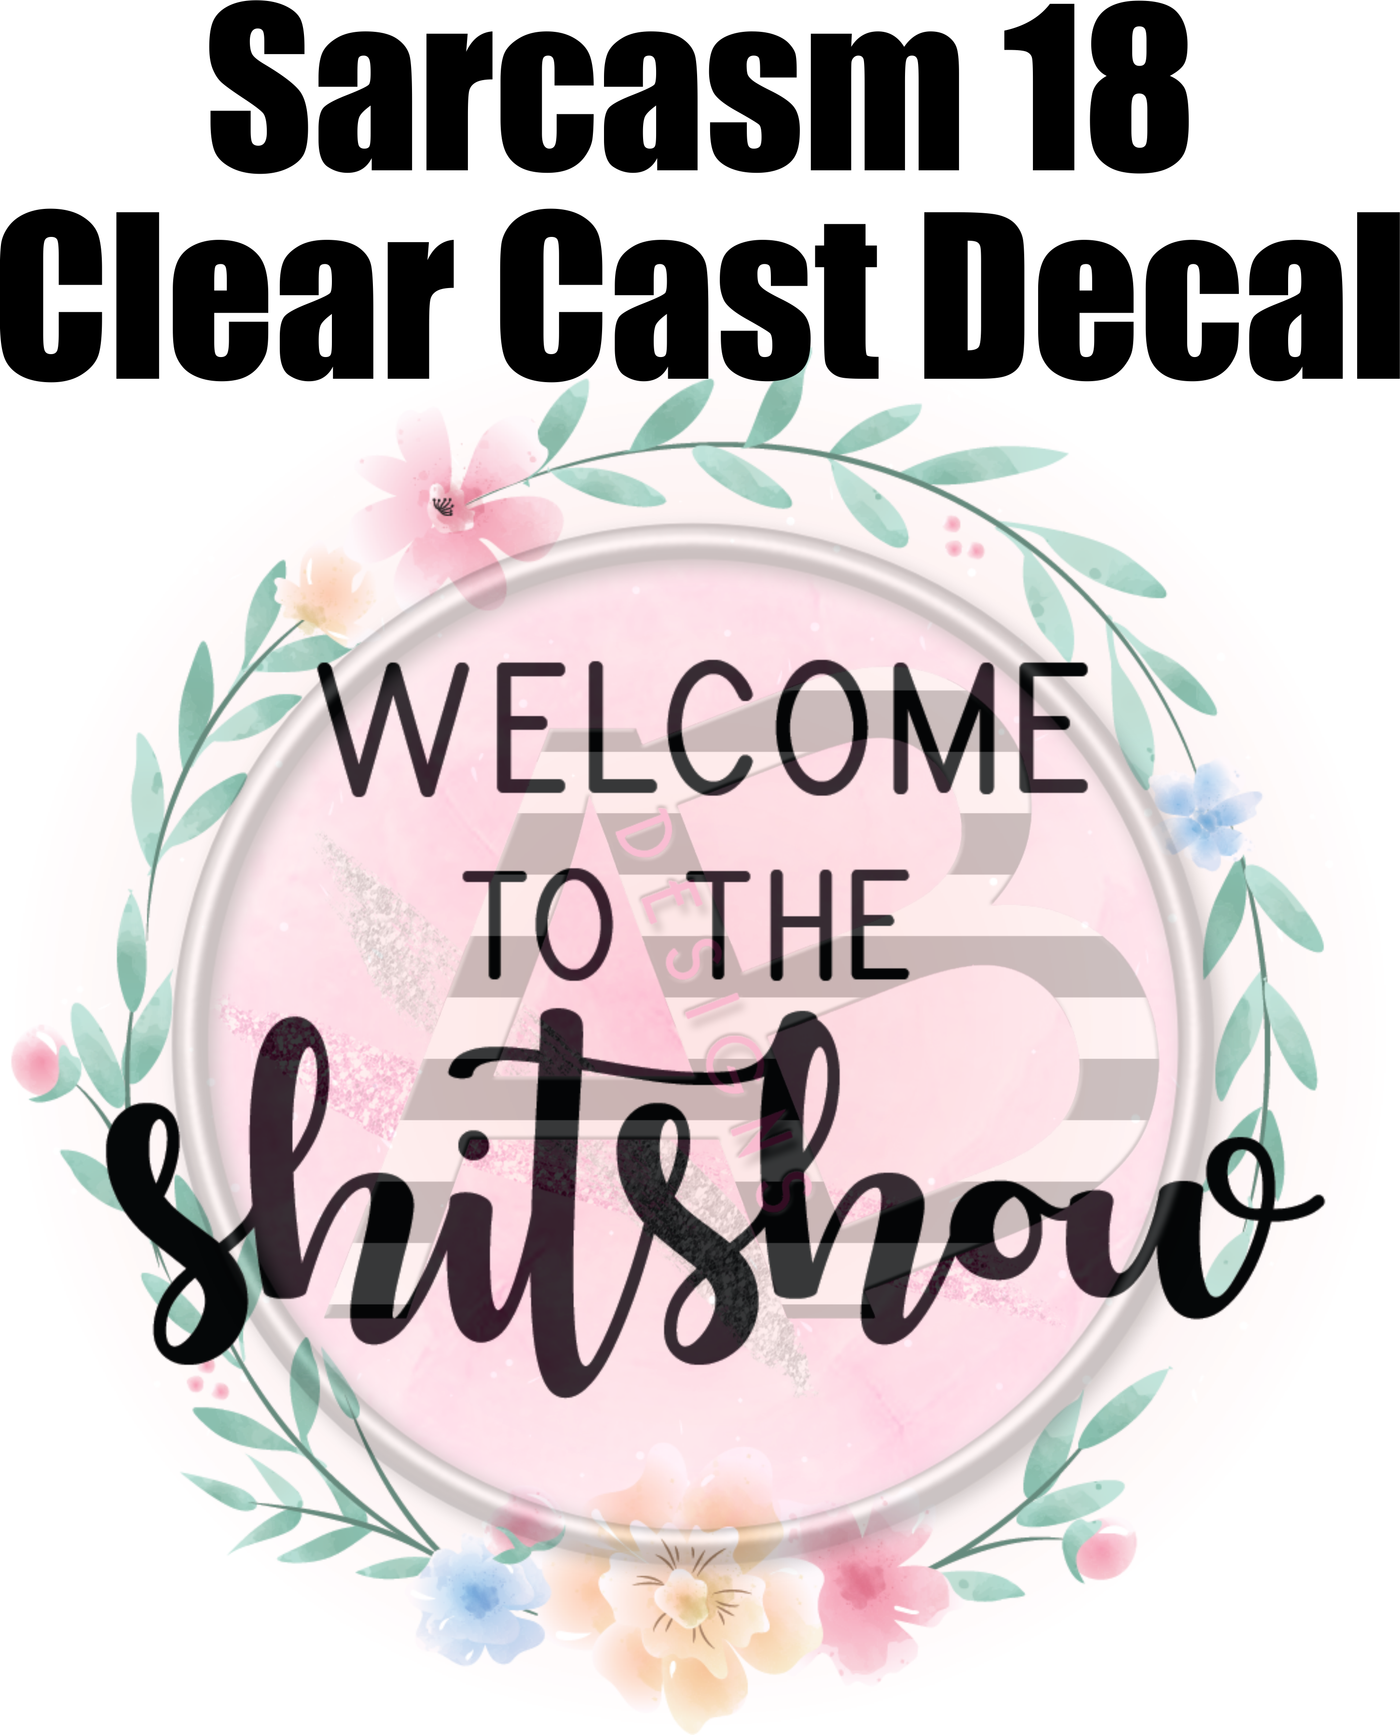 Sarcasm 18 - Clear Cast Decal